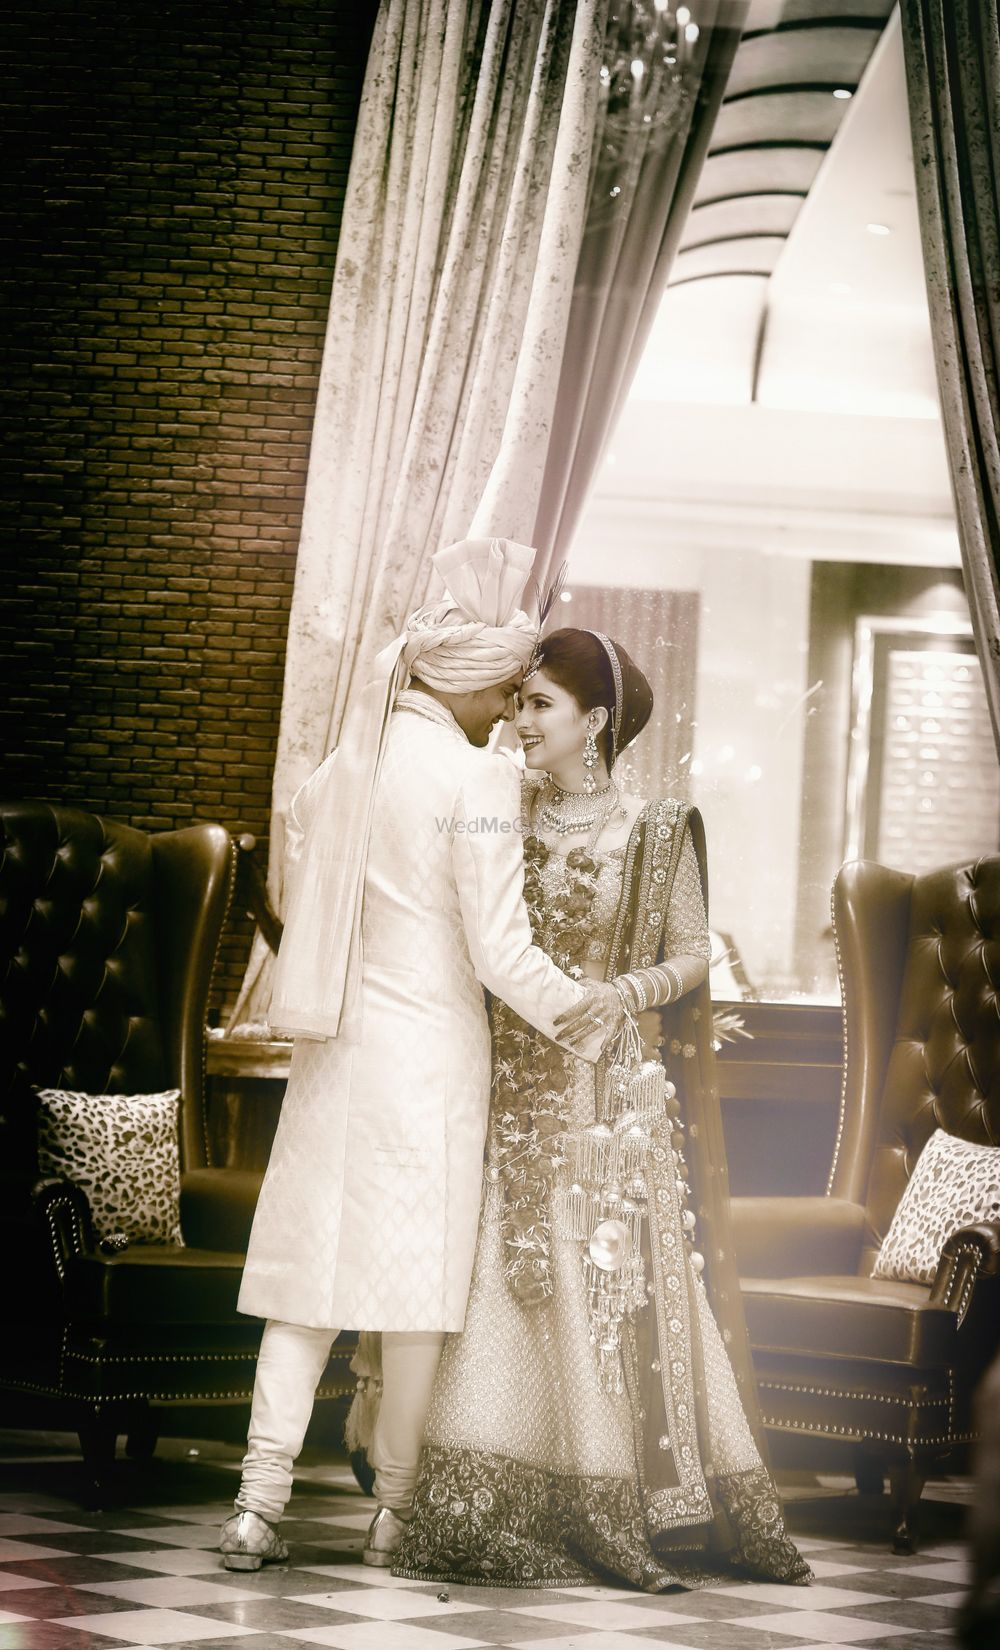 Photo From Sahil & Neha the magical bond... - By Dipak Studios